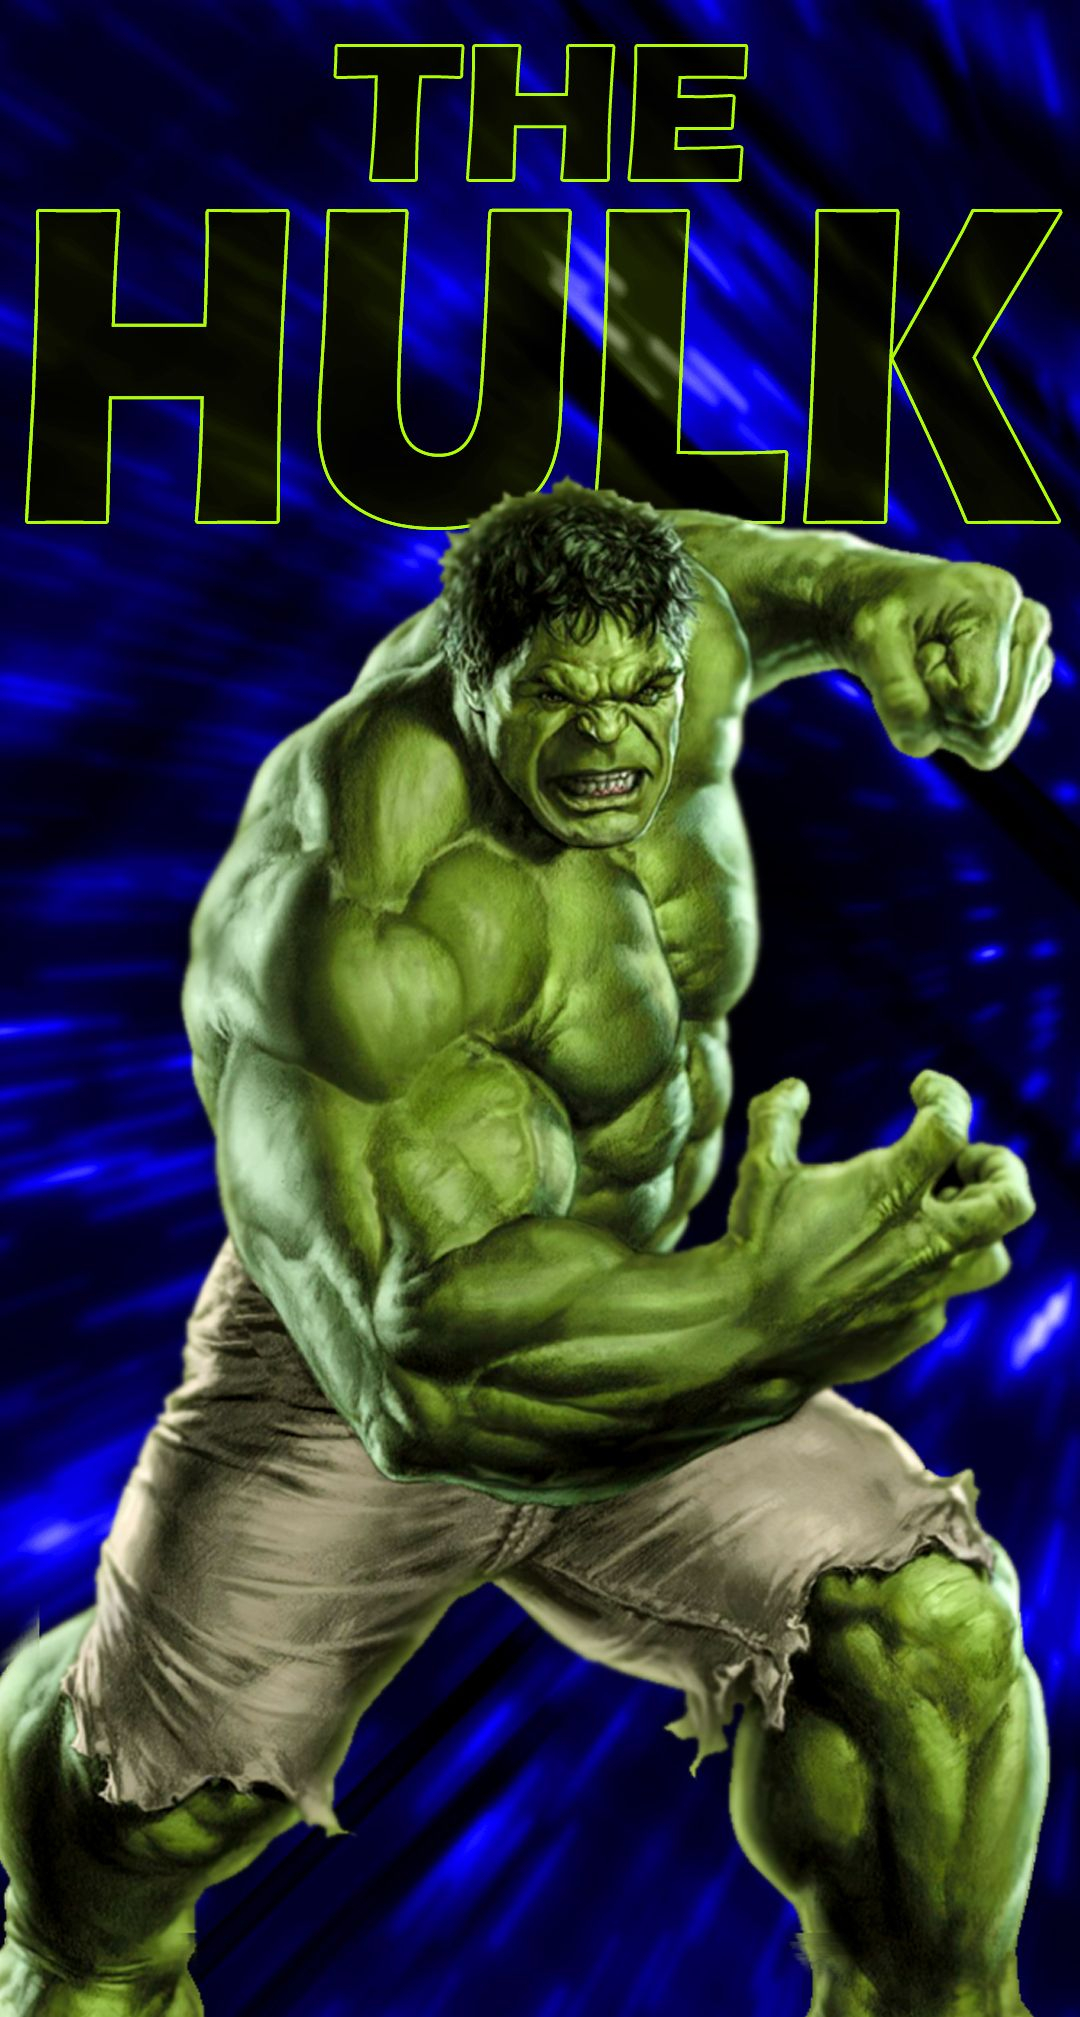 1080x2017 hulk latest mobile wallpaper 2018 hulk awesome mobile wallpaper blue hulk mobile wallpaper hulk hd mobile wallpaper h&acirc;&#128;&brvbar; | Marvel superhero posters, Hulk, Hulk marvel